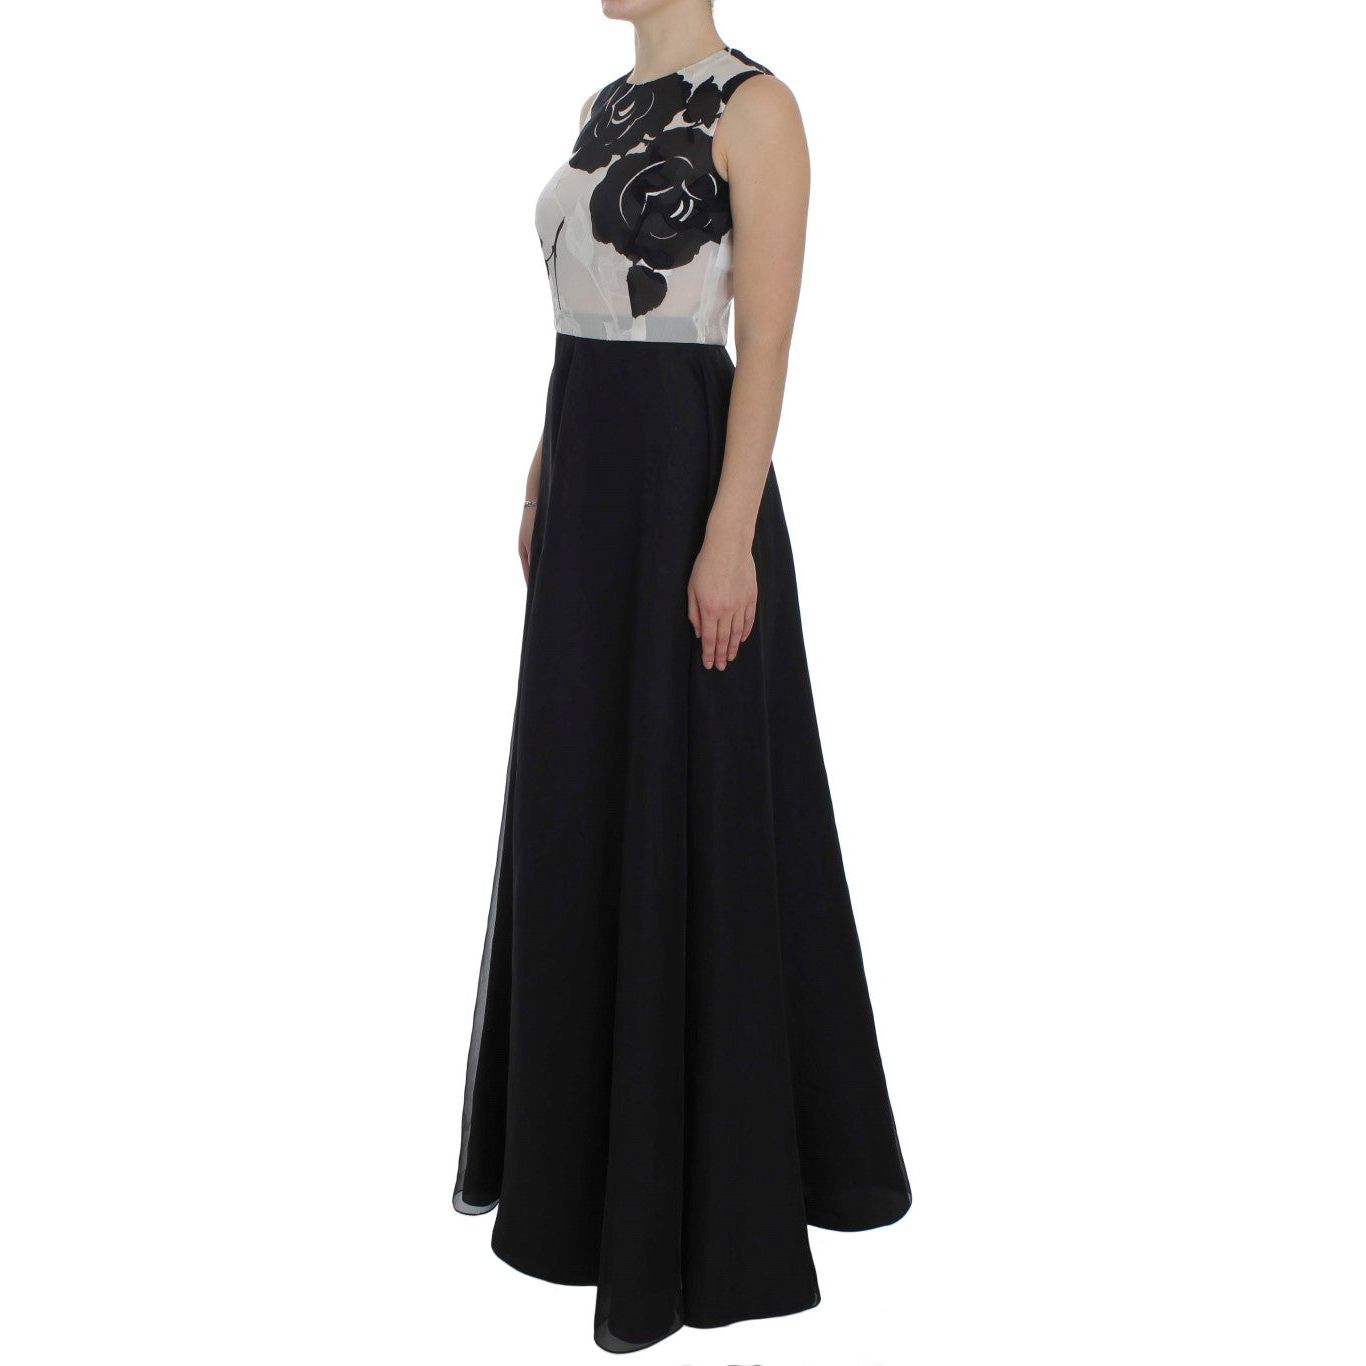 Dolce & Gabbana Elegant Floral Silk Full Length Dress black-white-floral-silk-sheath-gown-dress 72716-black-white-floral-silk-sheath-gown-dress-1.jpg